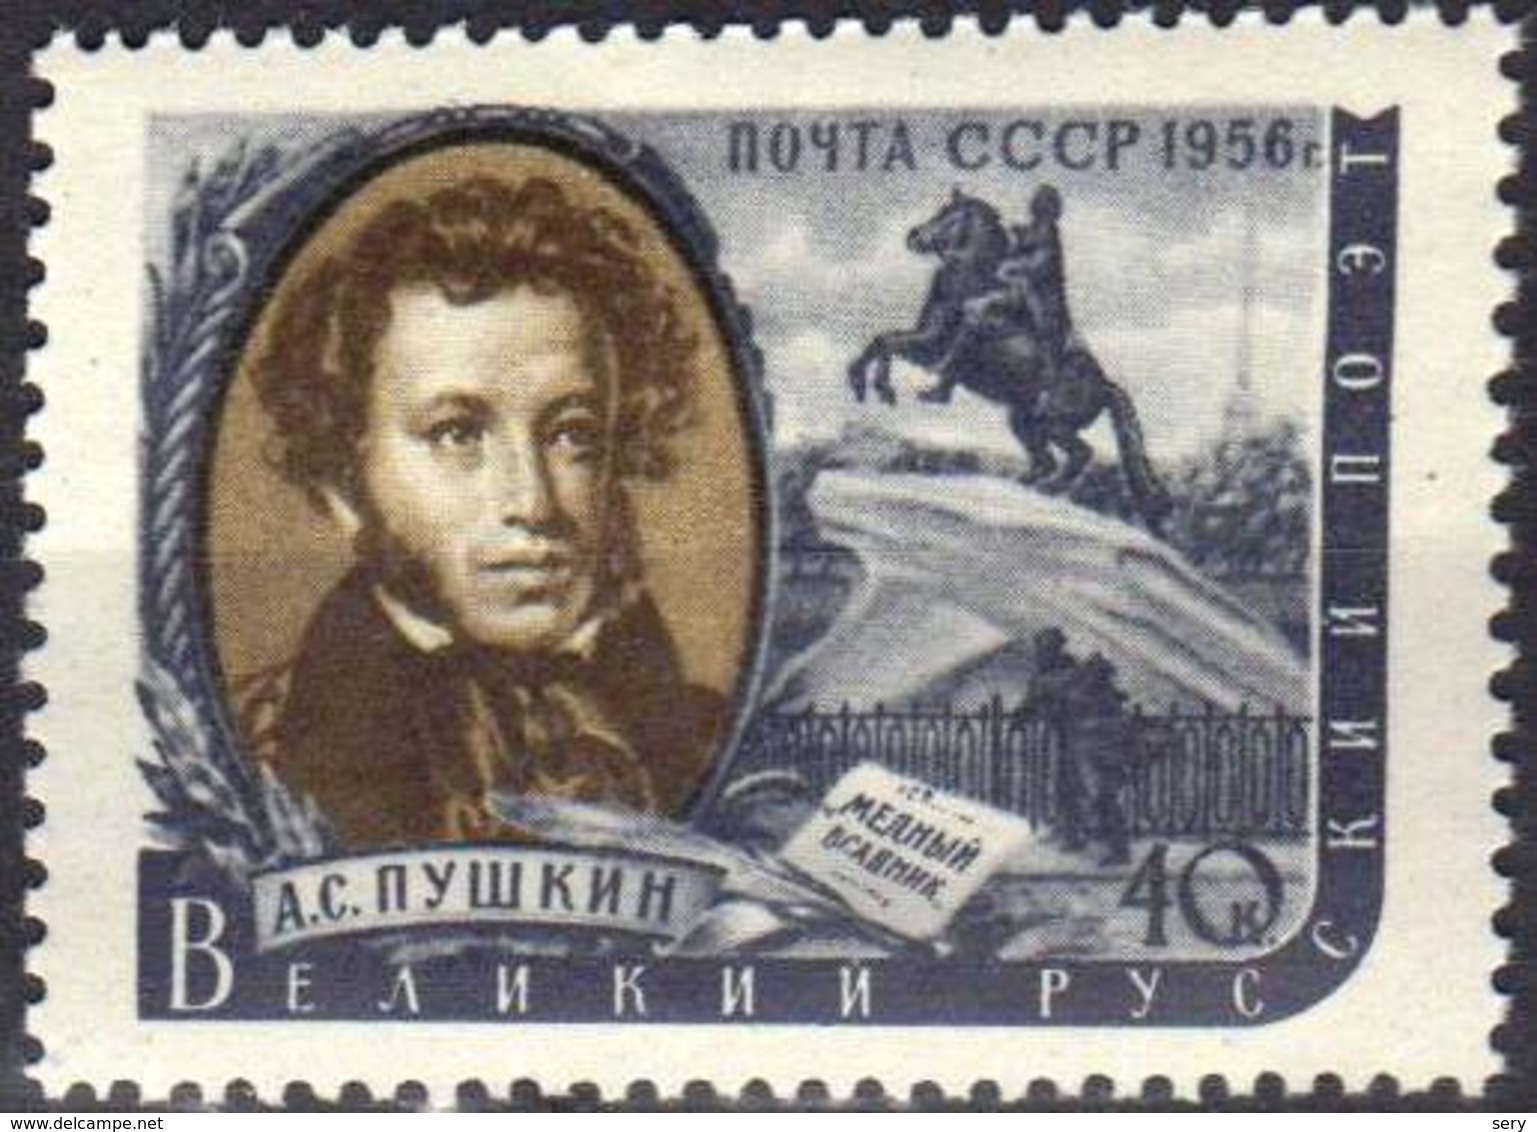 USSR 1956 1 V MNH Alexander Pushkin, The Great Russian Poet - Writers